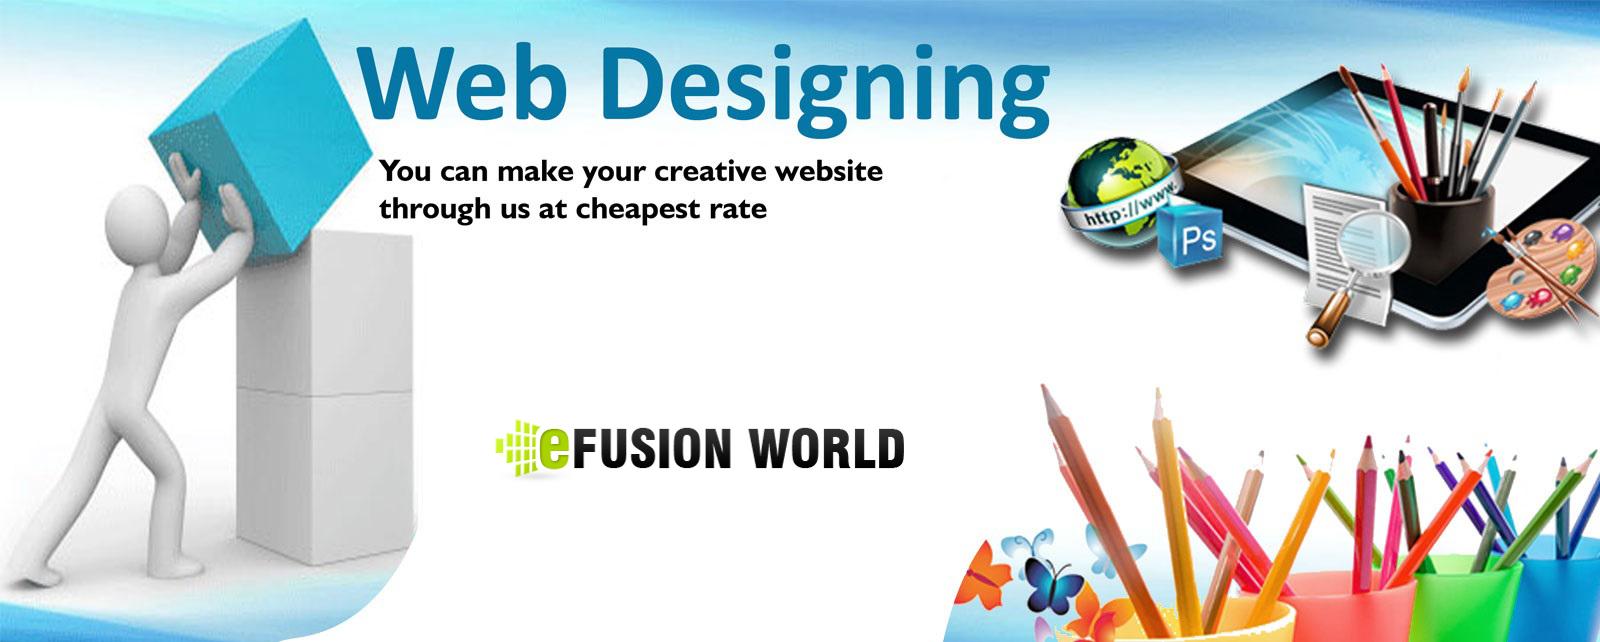 Professional Web Designing Services